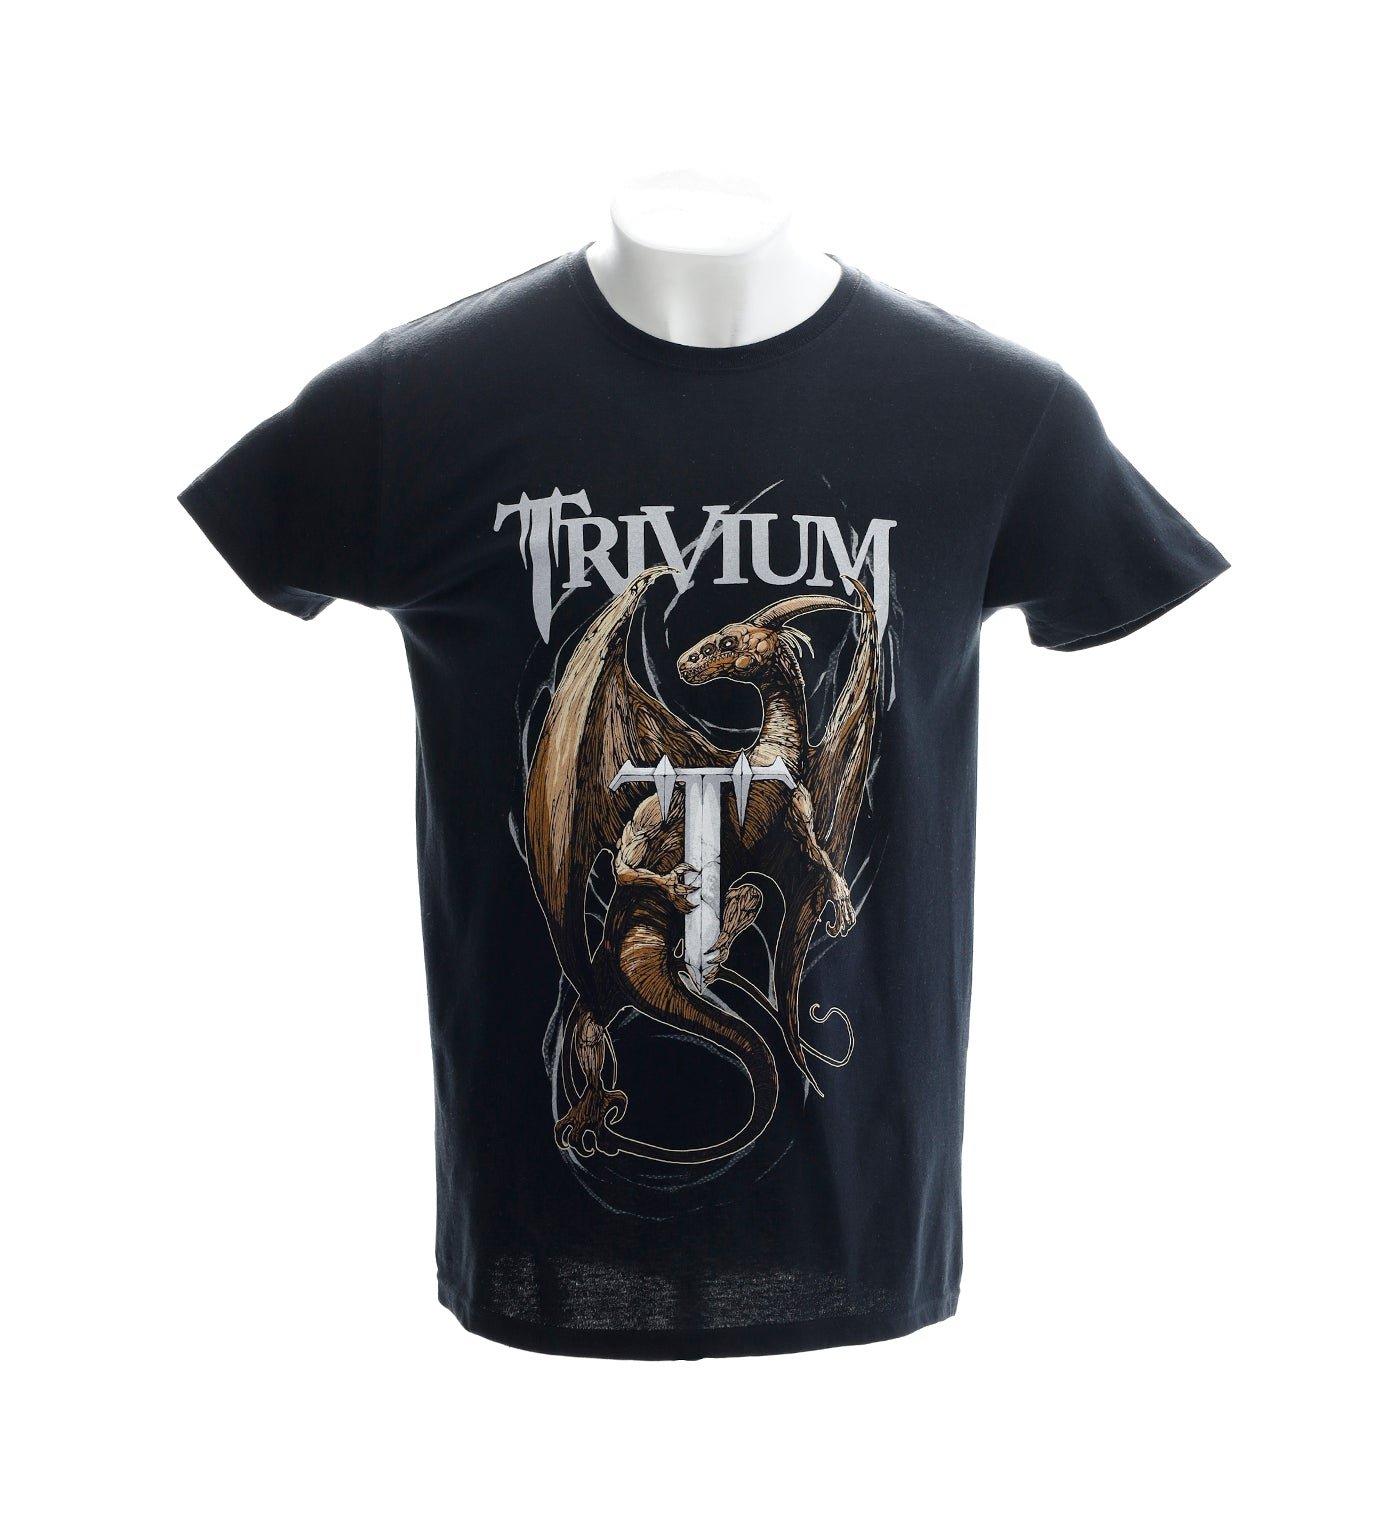 Perched Dragon, Black Medium / Black By Trivium